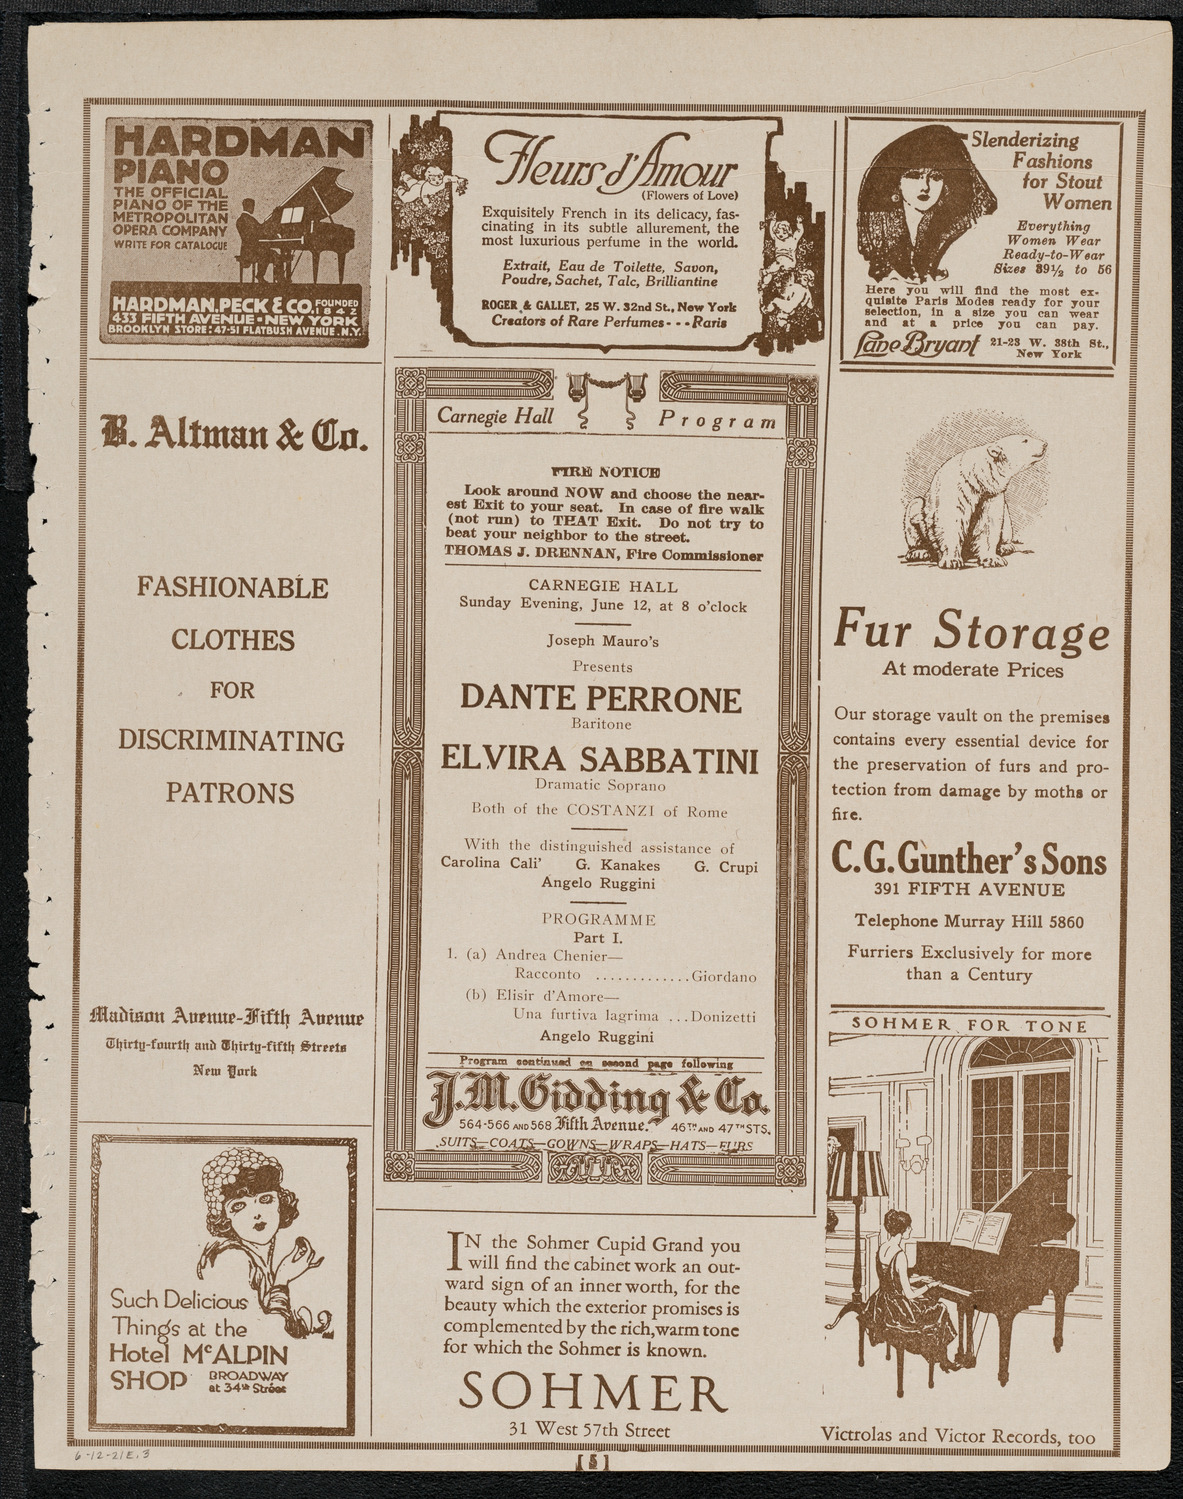 Dante Perrone and Elvira Sabbatini, June 12, 1921, program page 5